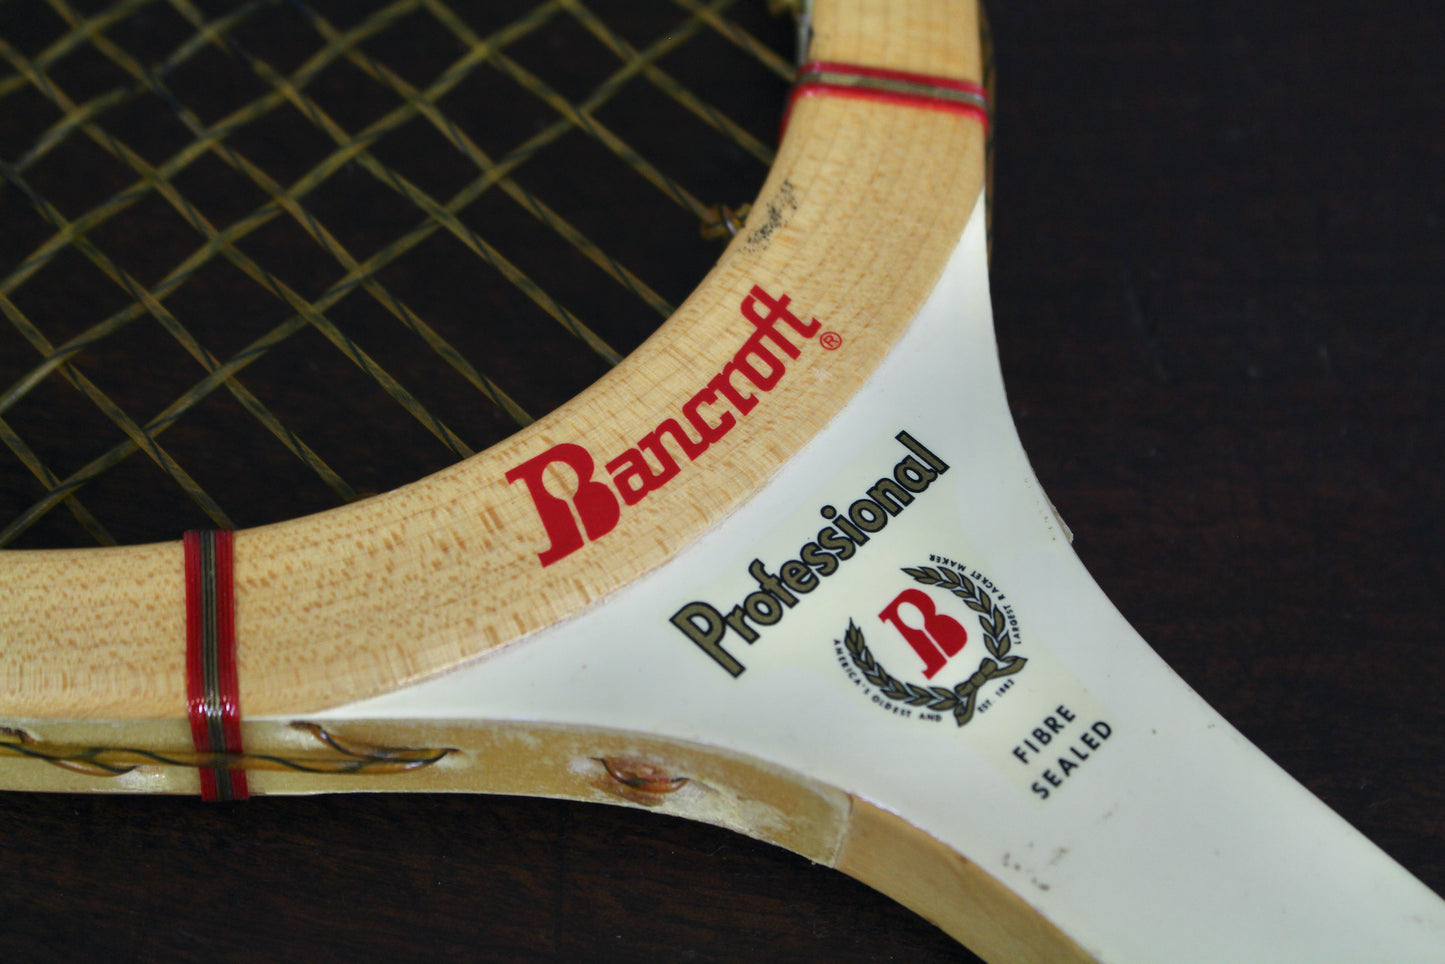 Bancroft "Professional" Tennis Racket